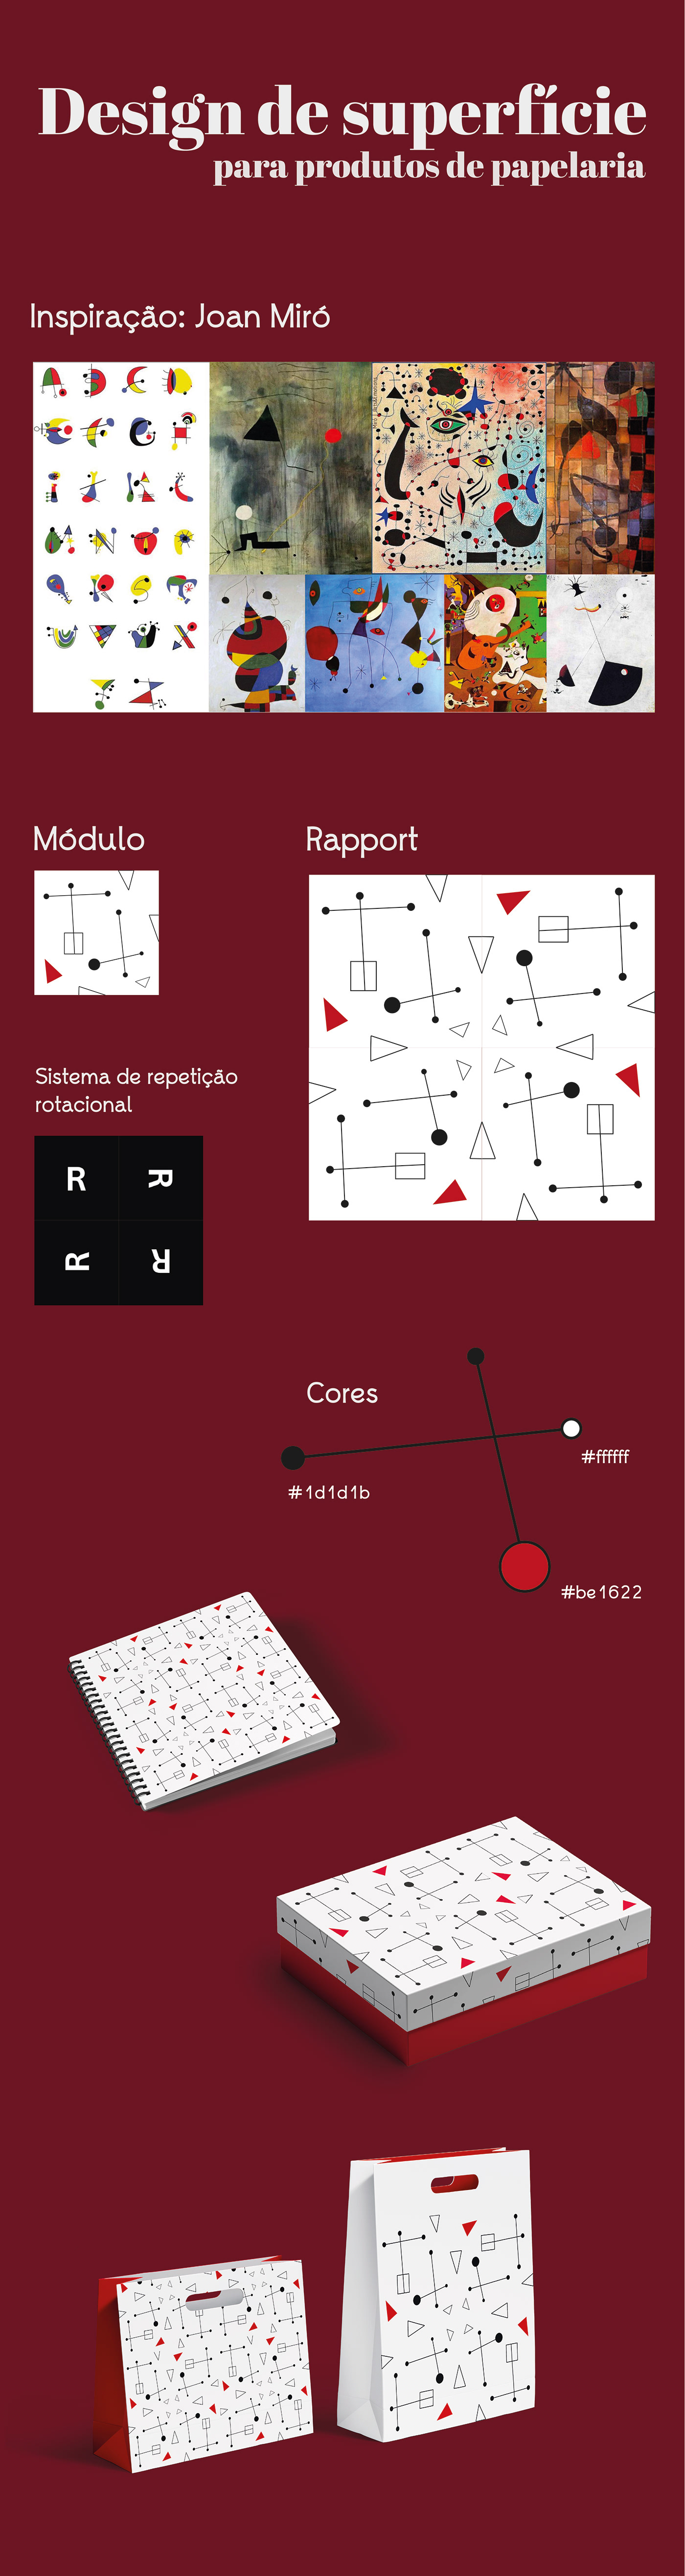 design surface design design de superfície miro Illustrator vector papelaria Estampa rapport joanmirò